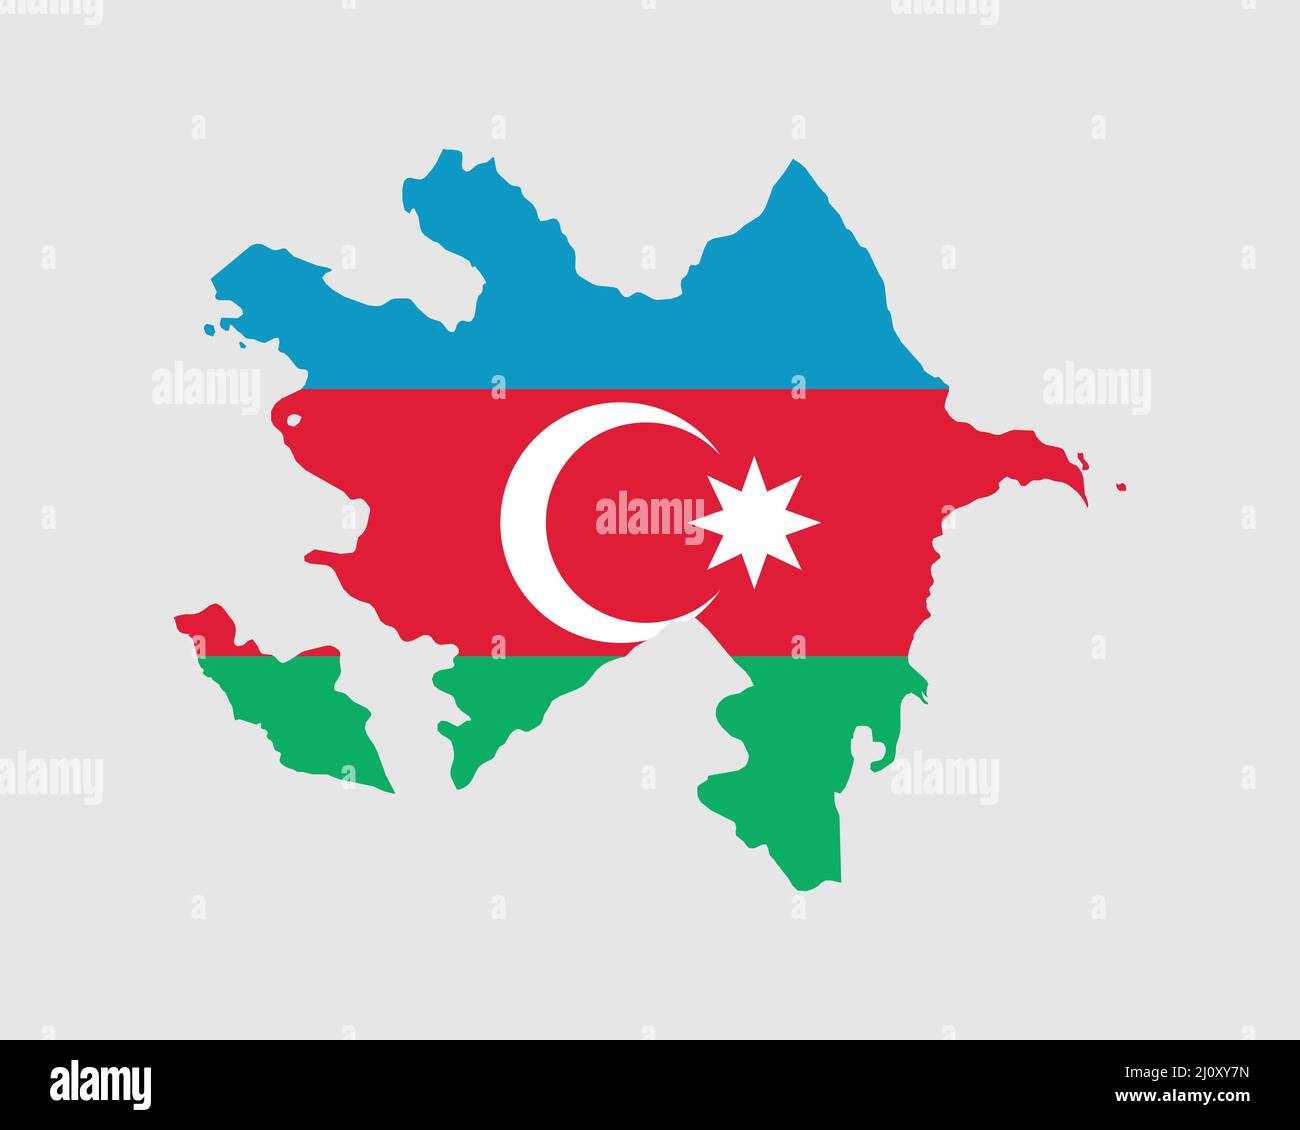 Azerbaijan Map Flag. Map of Azerbaijan with country flag of Azerbaijan. Vector illustration. Stock Vector